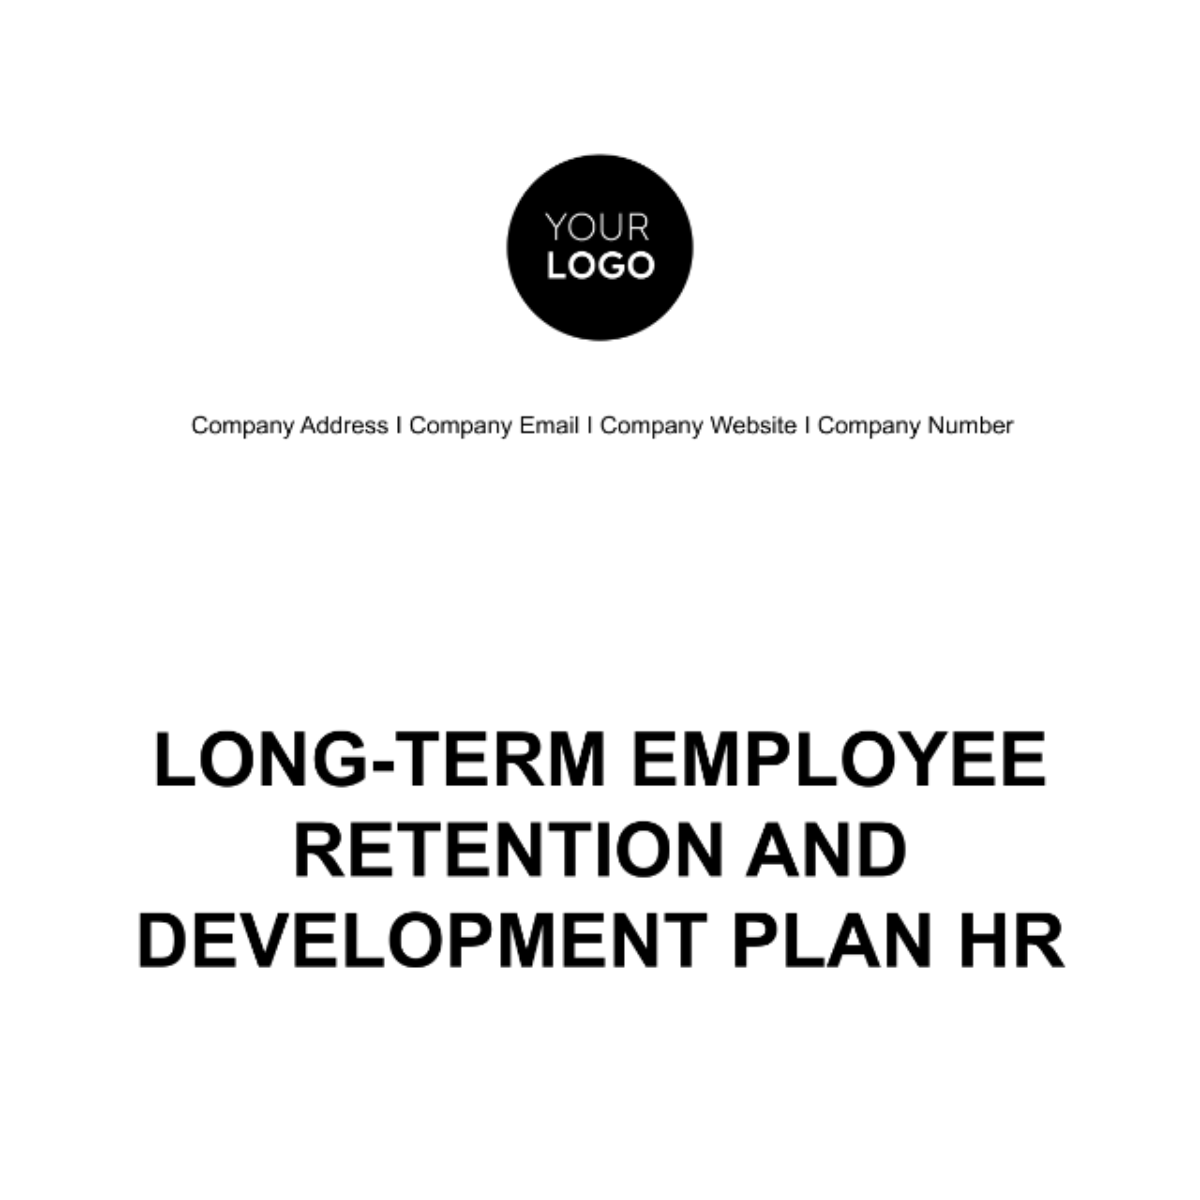 Free Long-Term Employee Retention and Development Plan HR Template